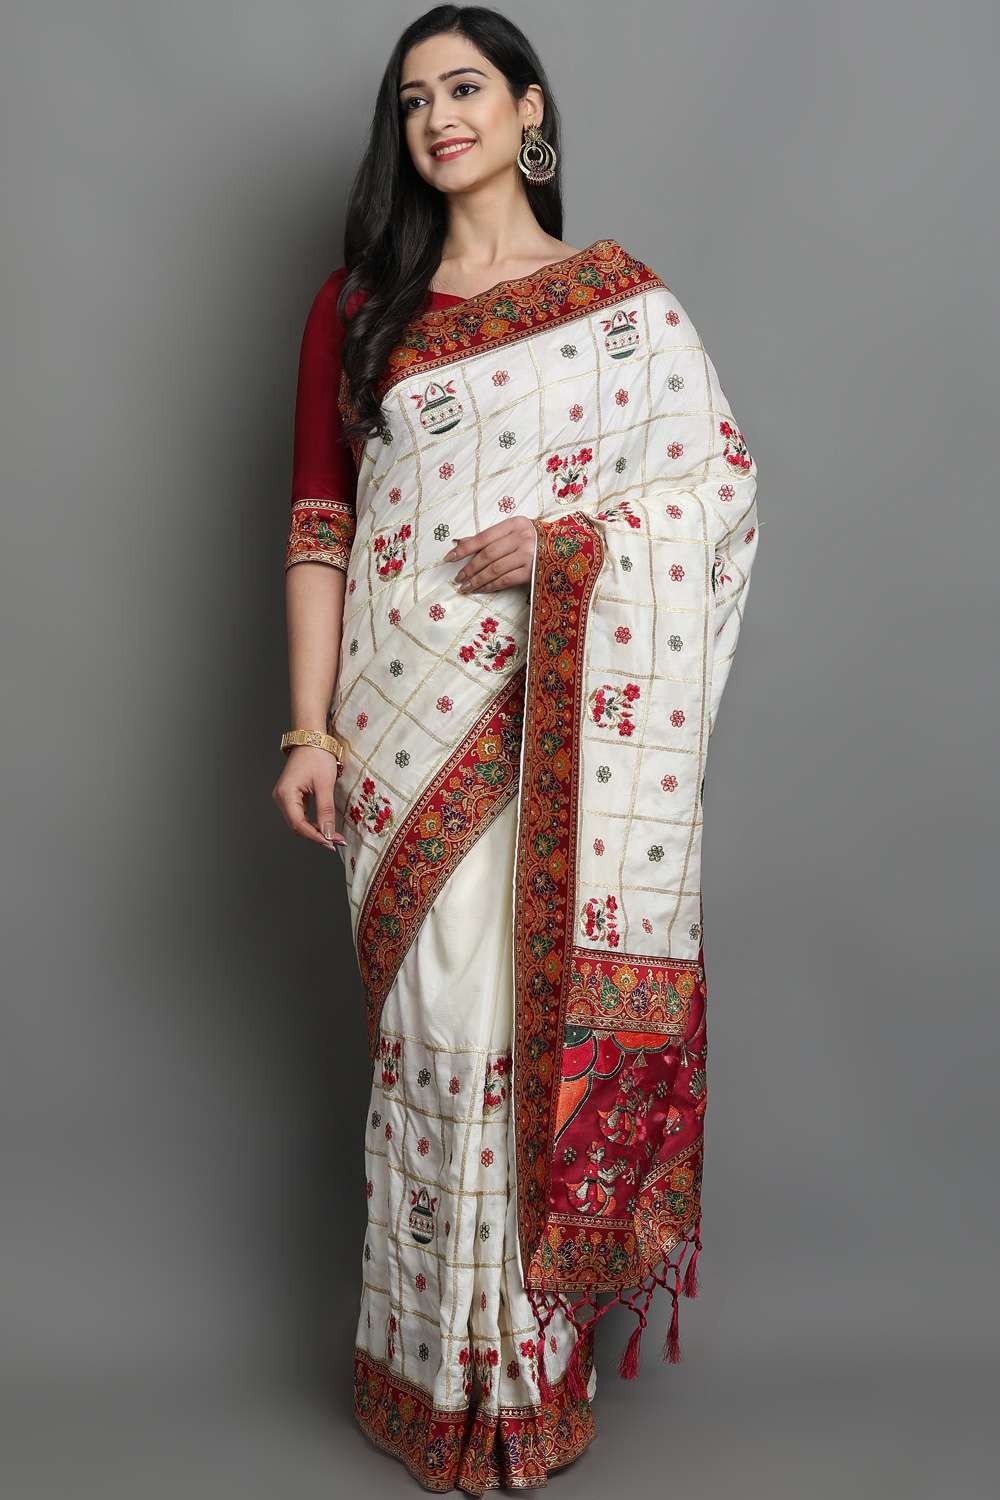 Discover 148+ white silk blouse for saree super hot